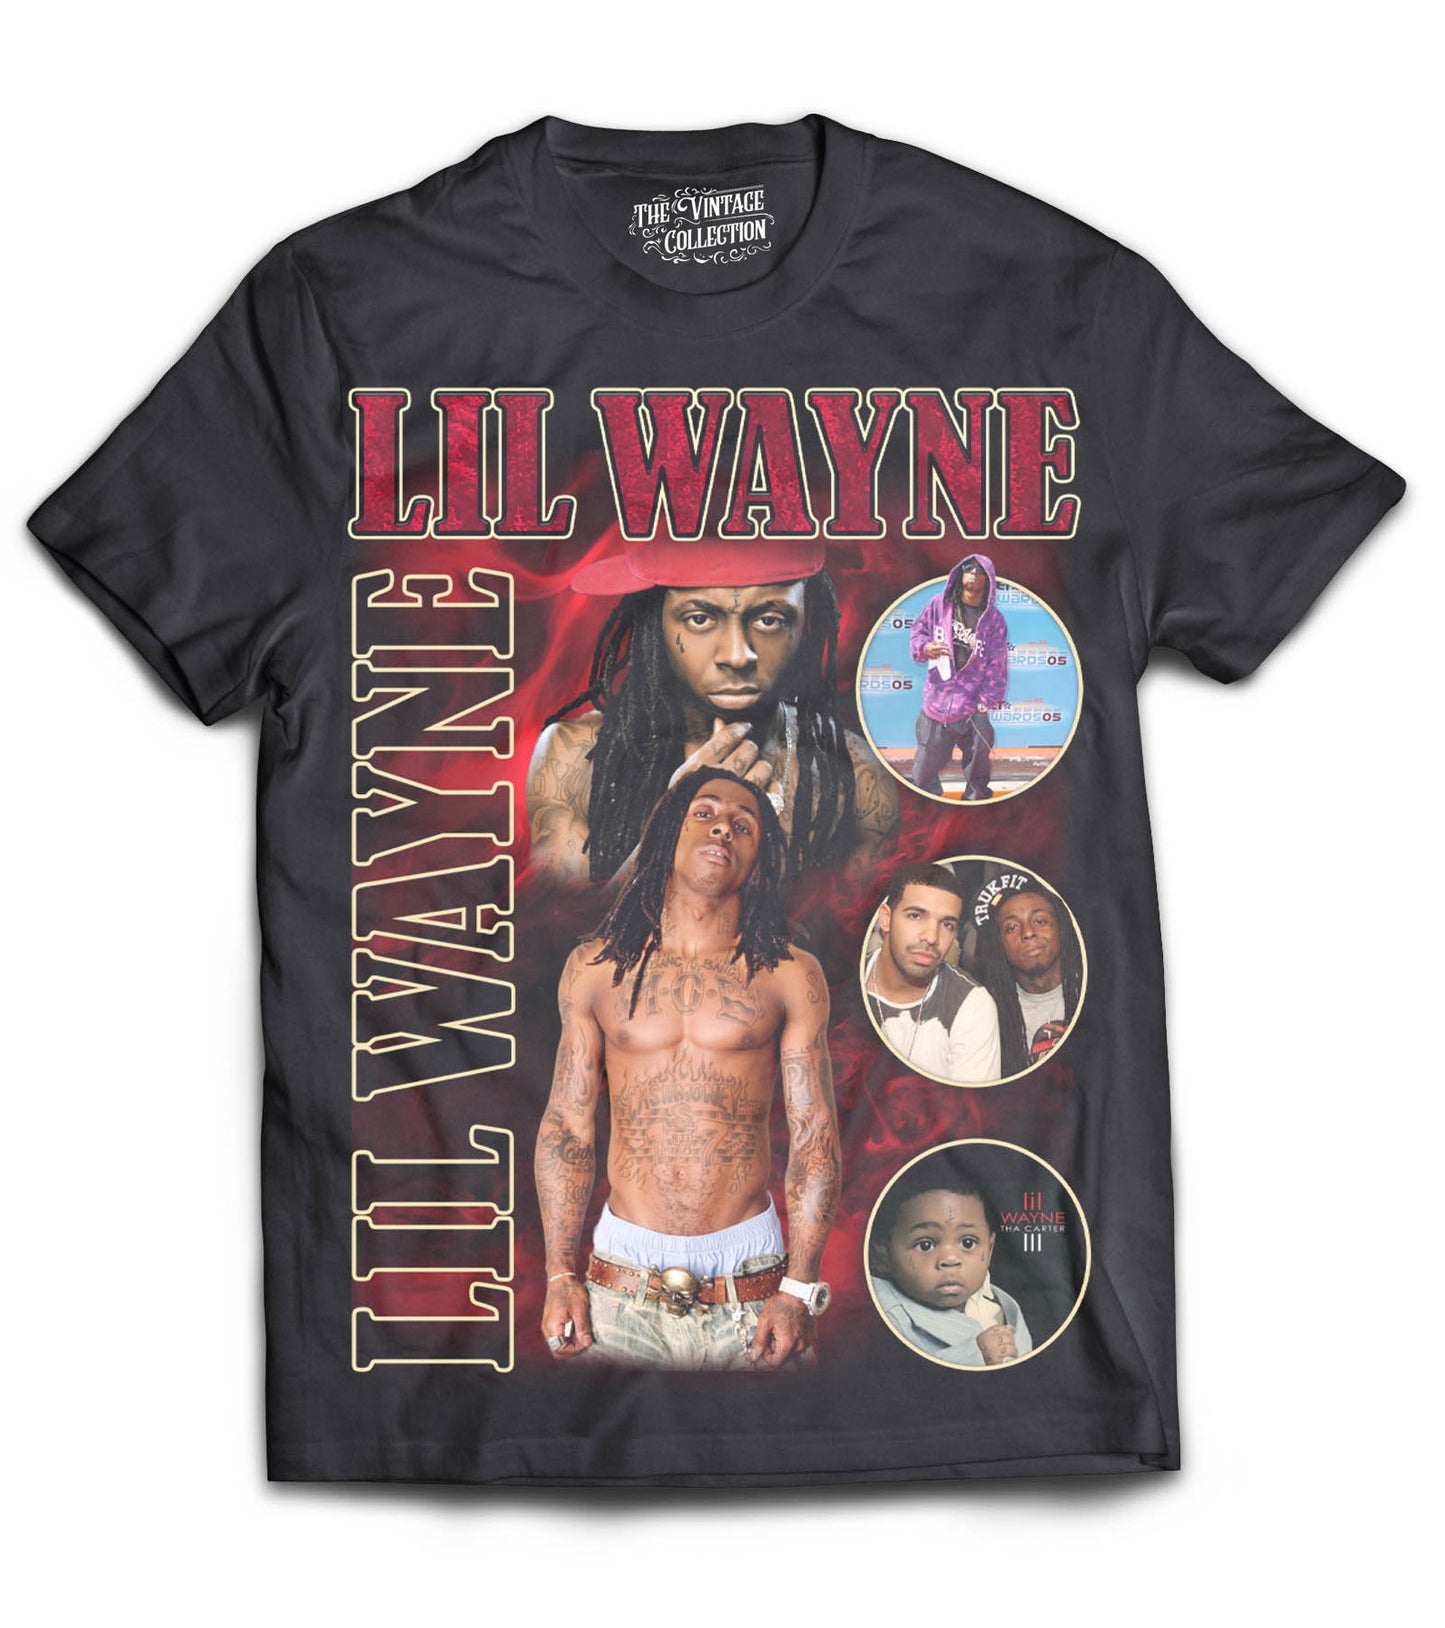 Lil Wayne Tribute Shirt (Black)